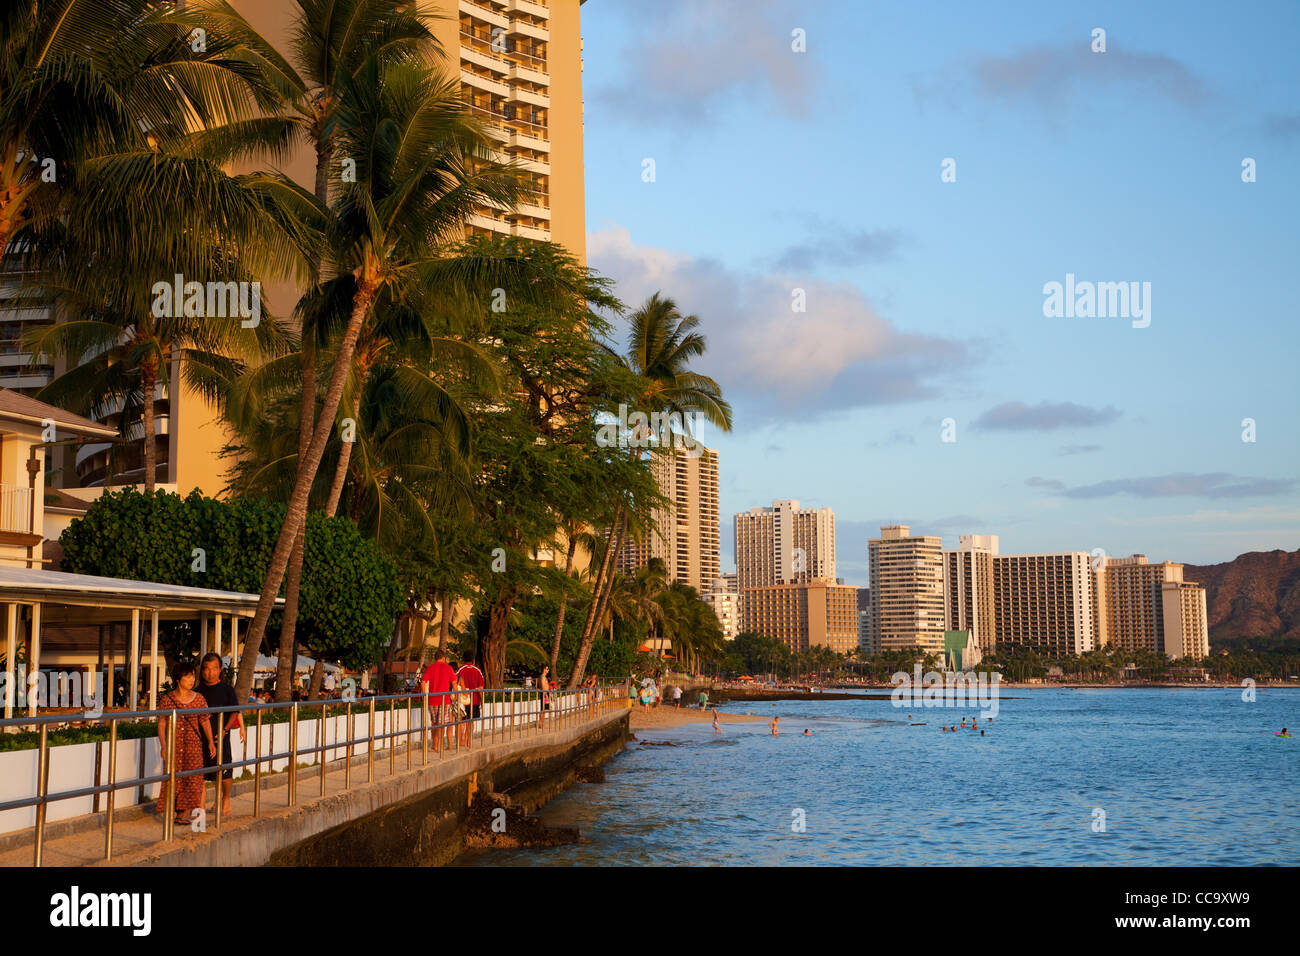 La spiaggia di Waikiki, Honolulu, Hawaii. Foto Stock